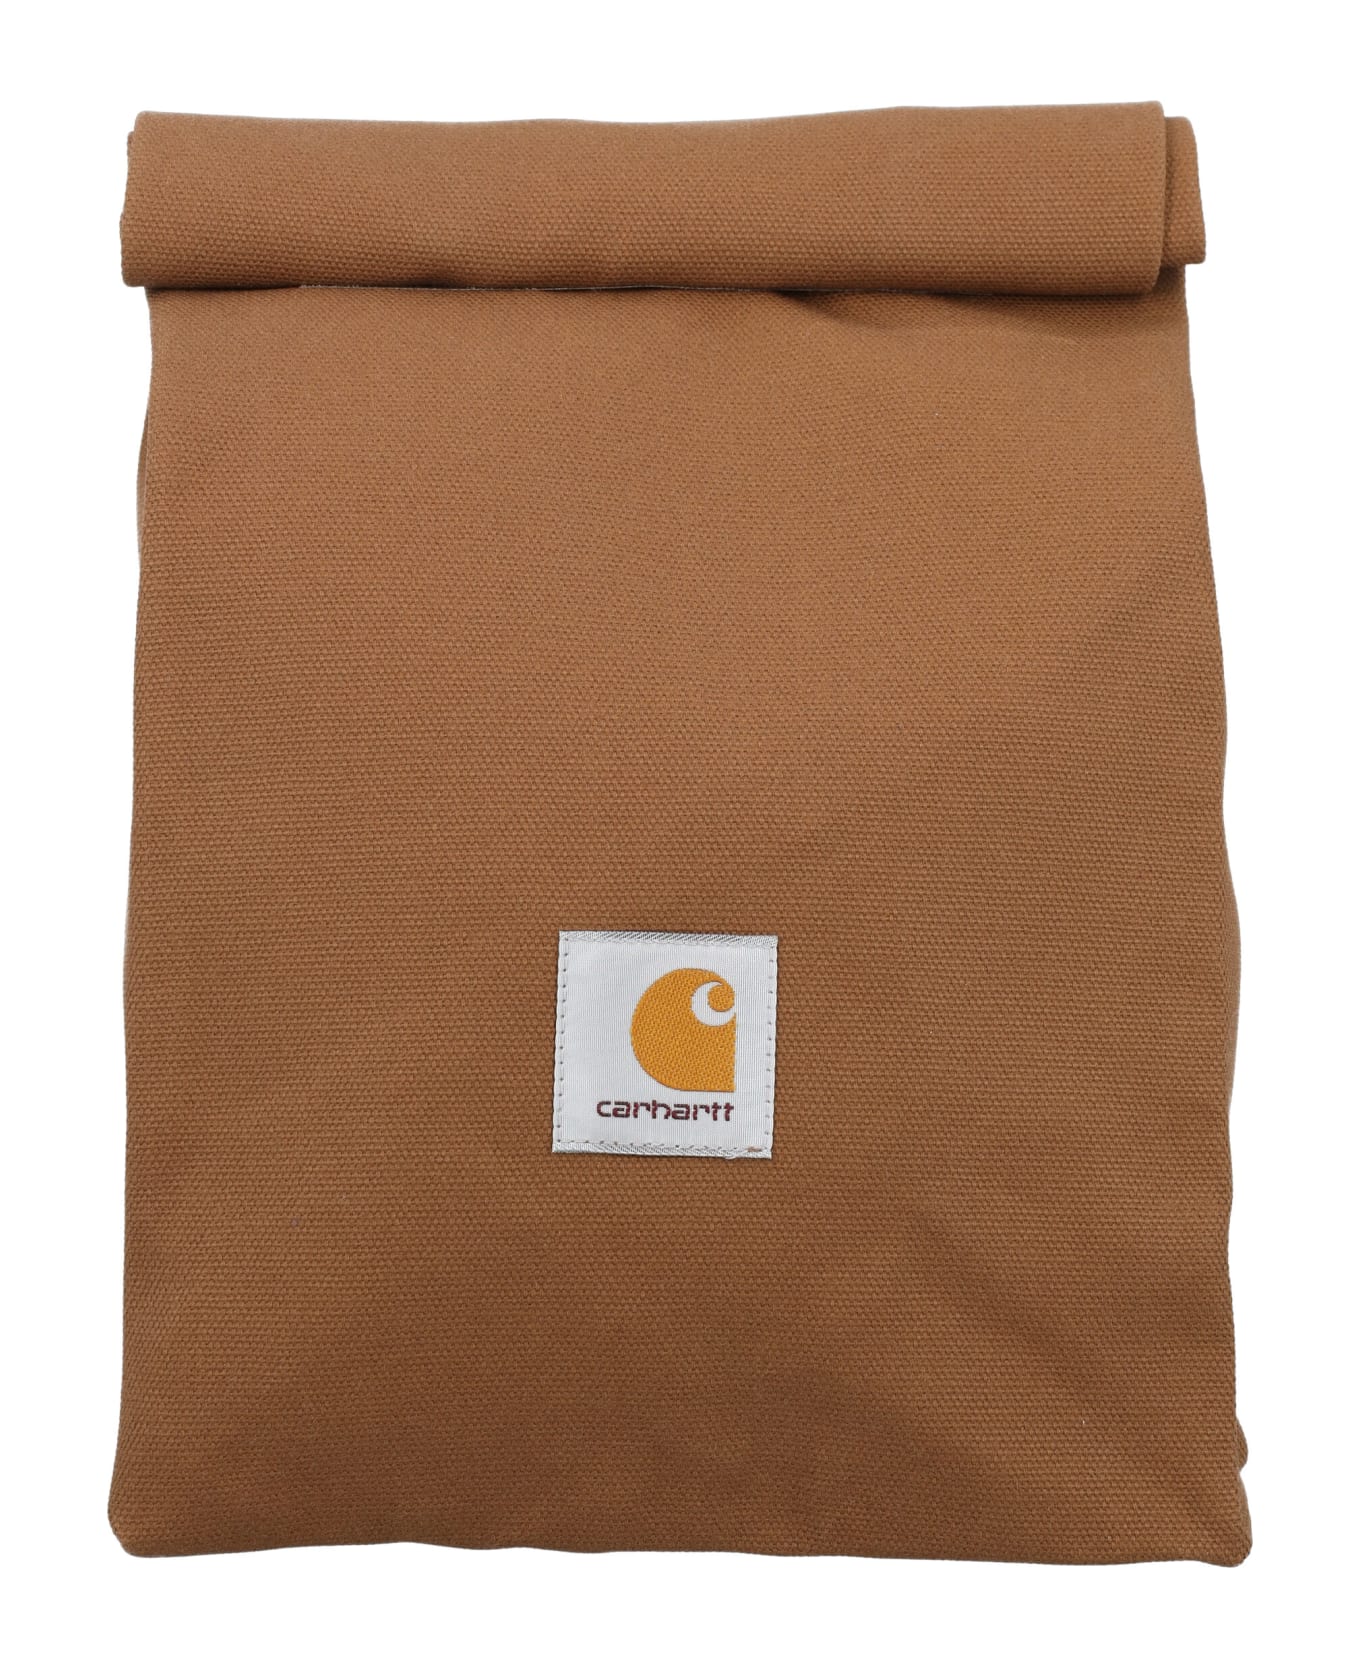 Carhartt Lunch Bag - HAMILTON BROWN